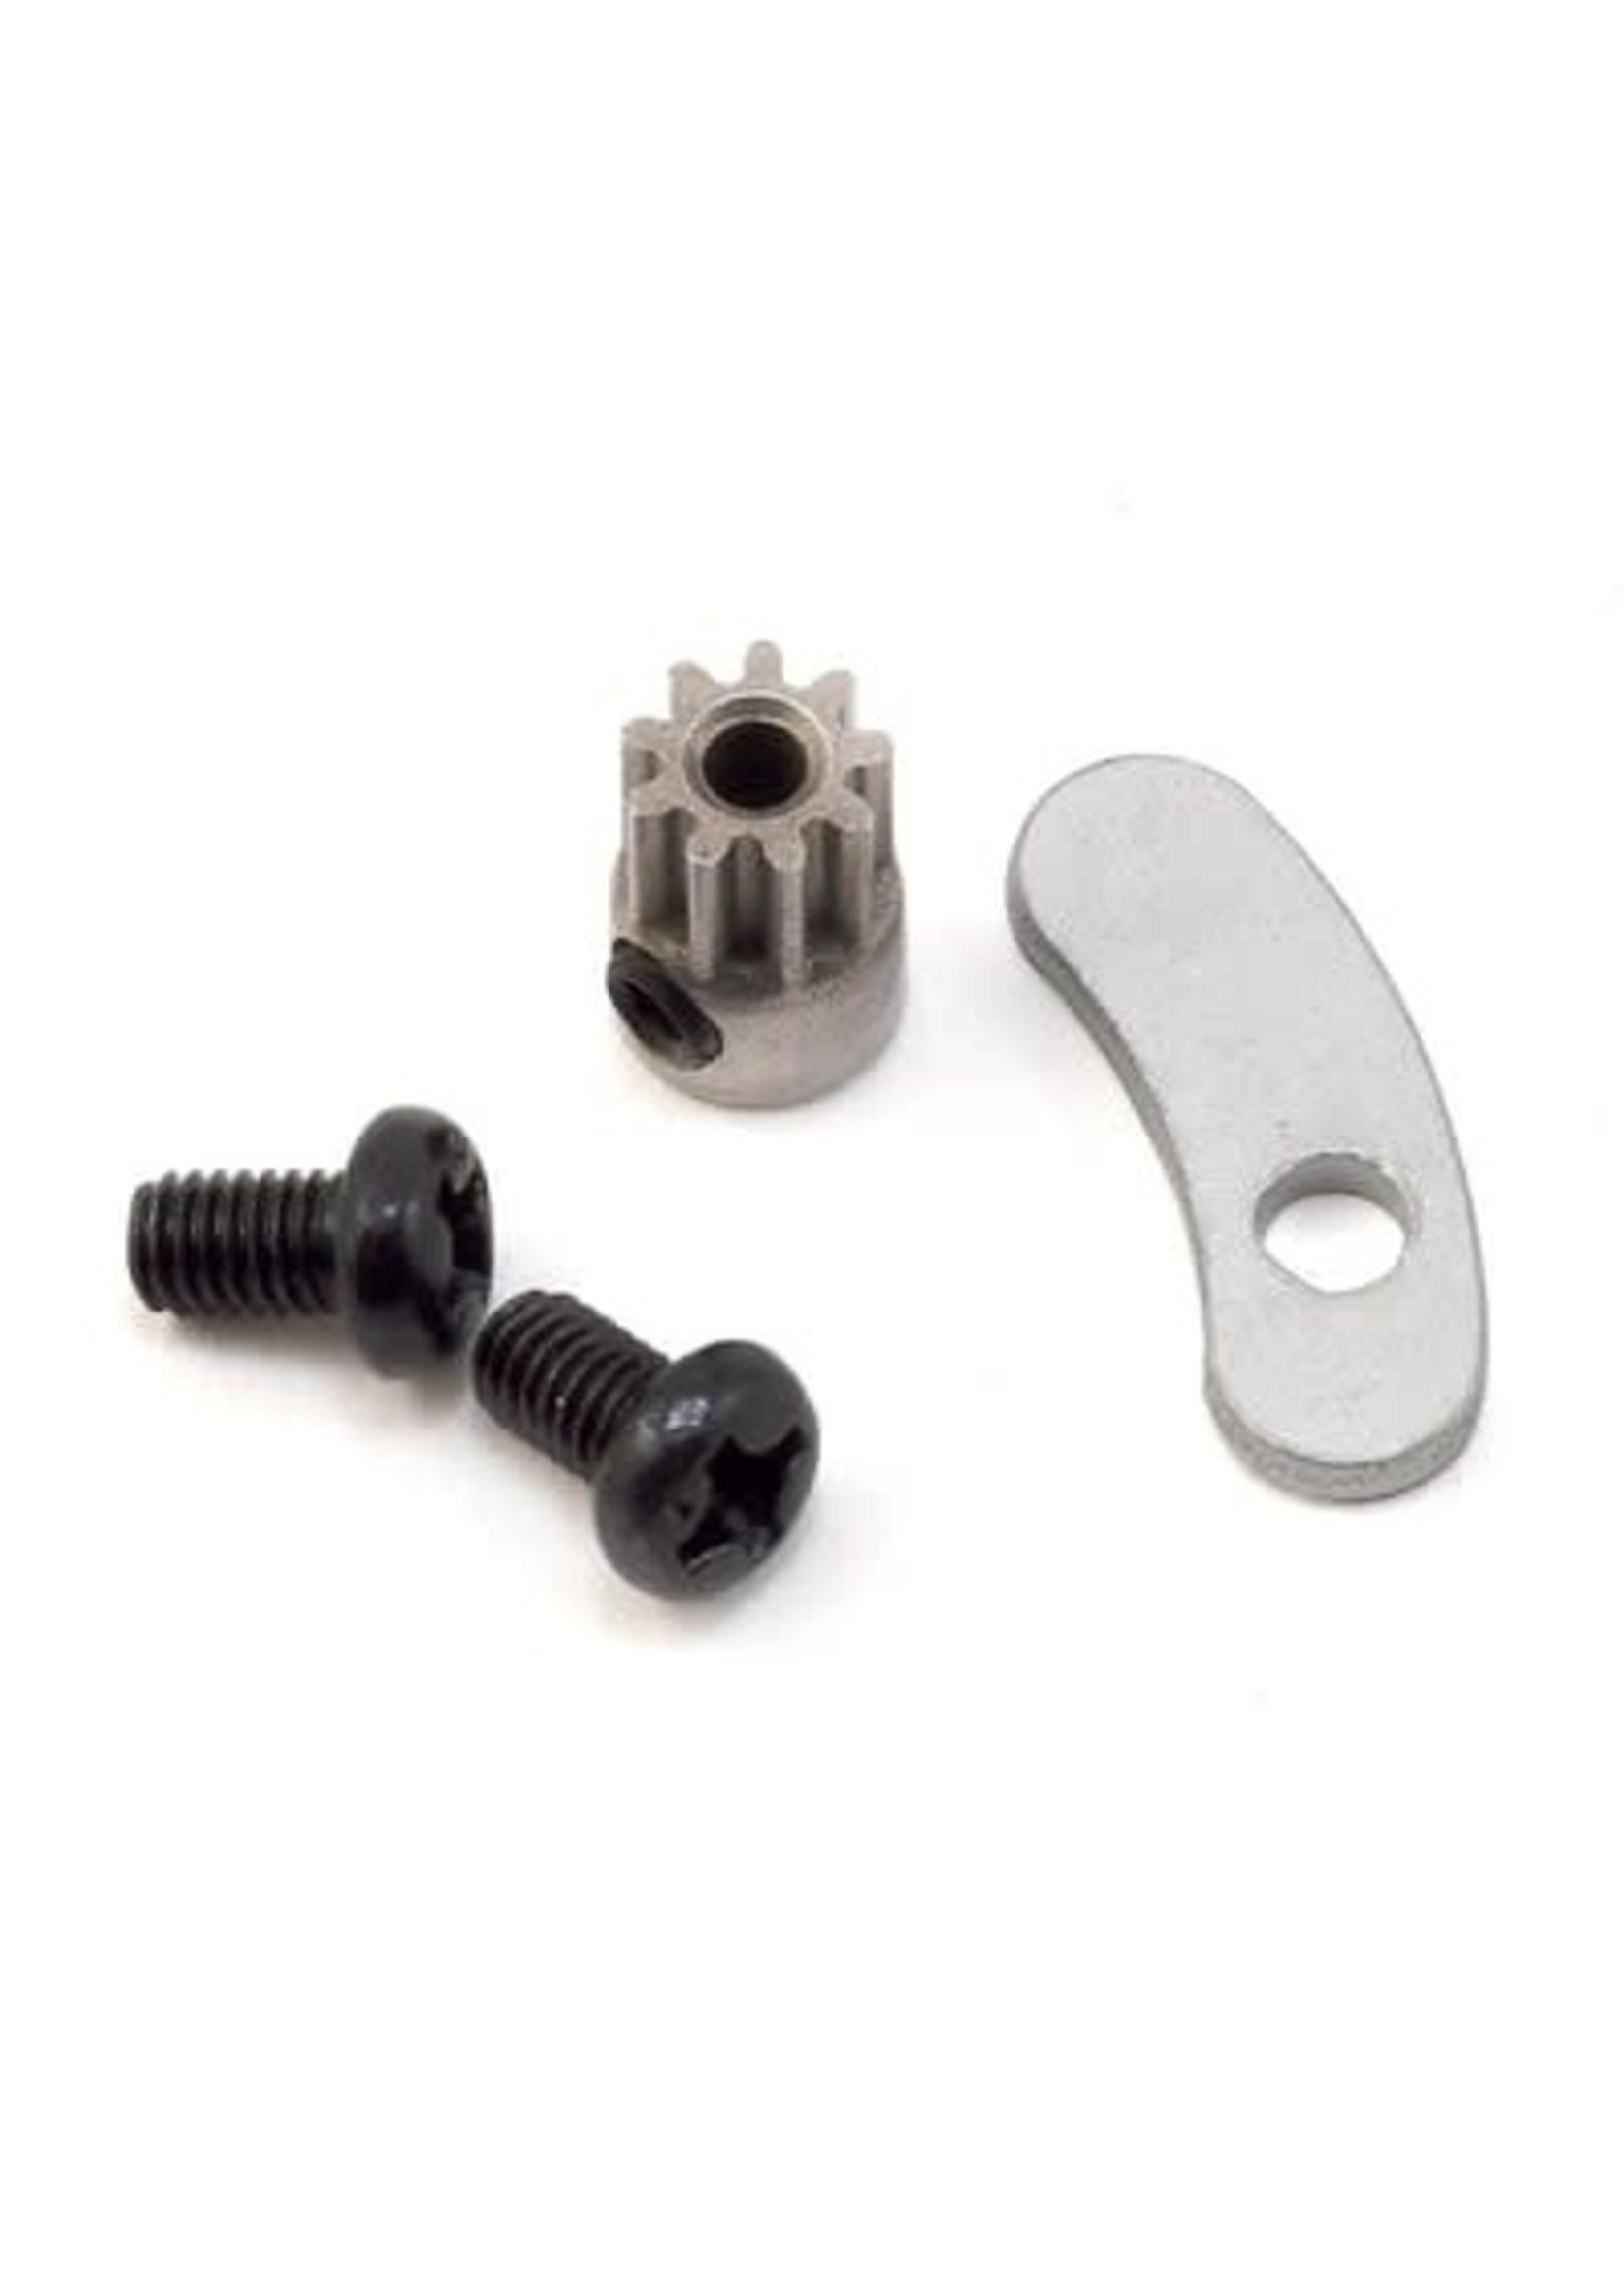 Traxxas 7644 Gear, 9-T pinion/ set screw